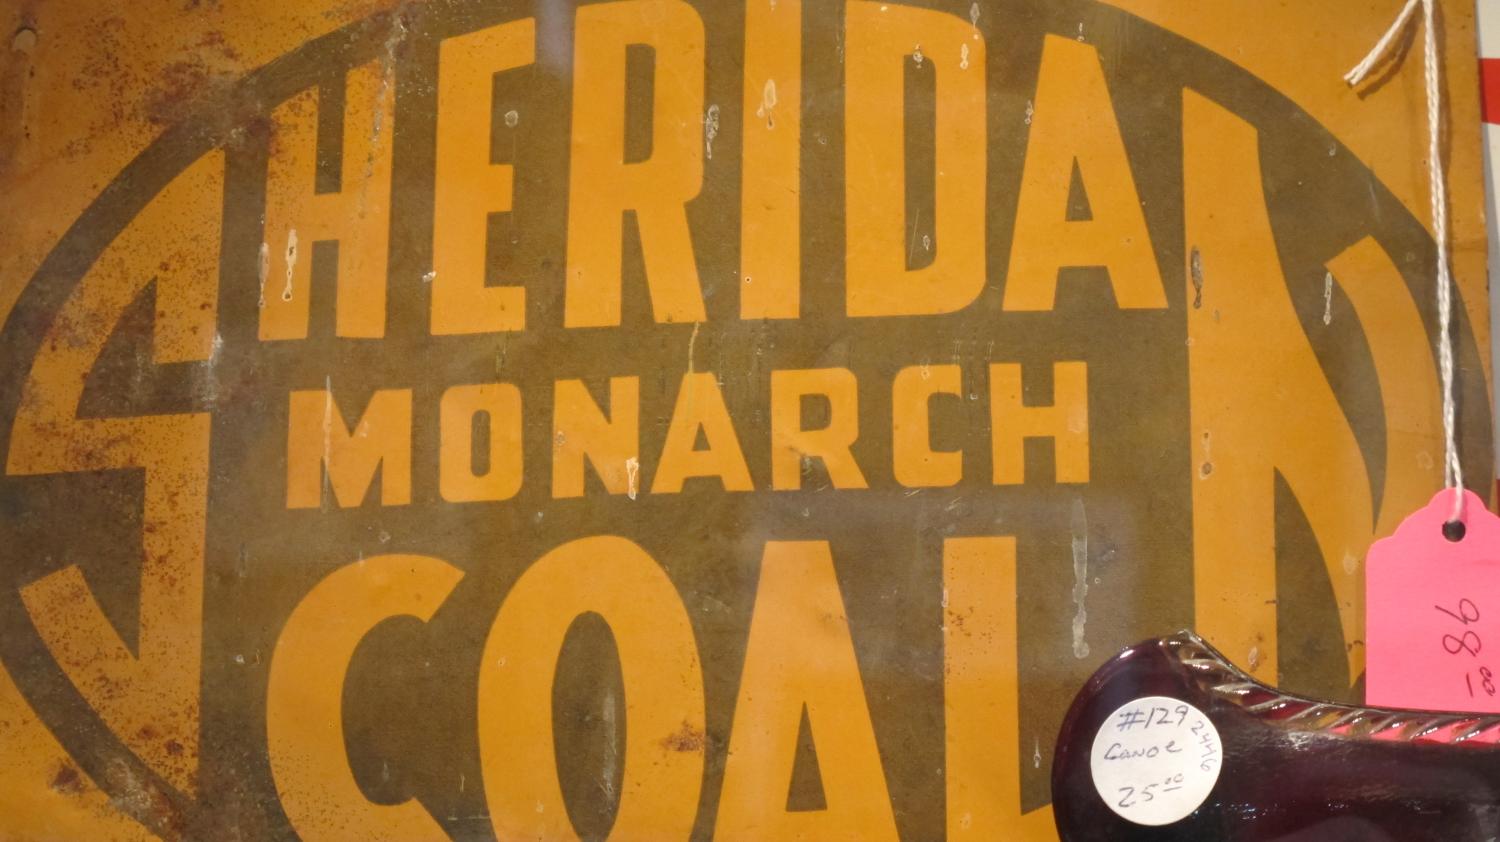 Sheridan Coal Mining Signs 